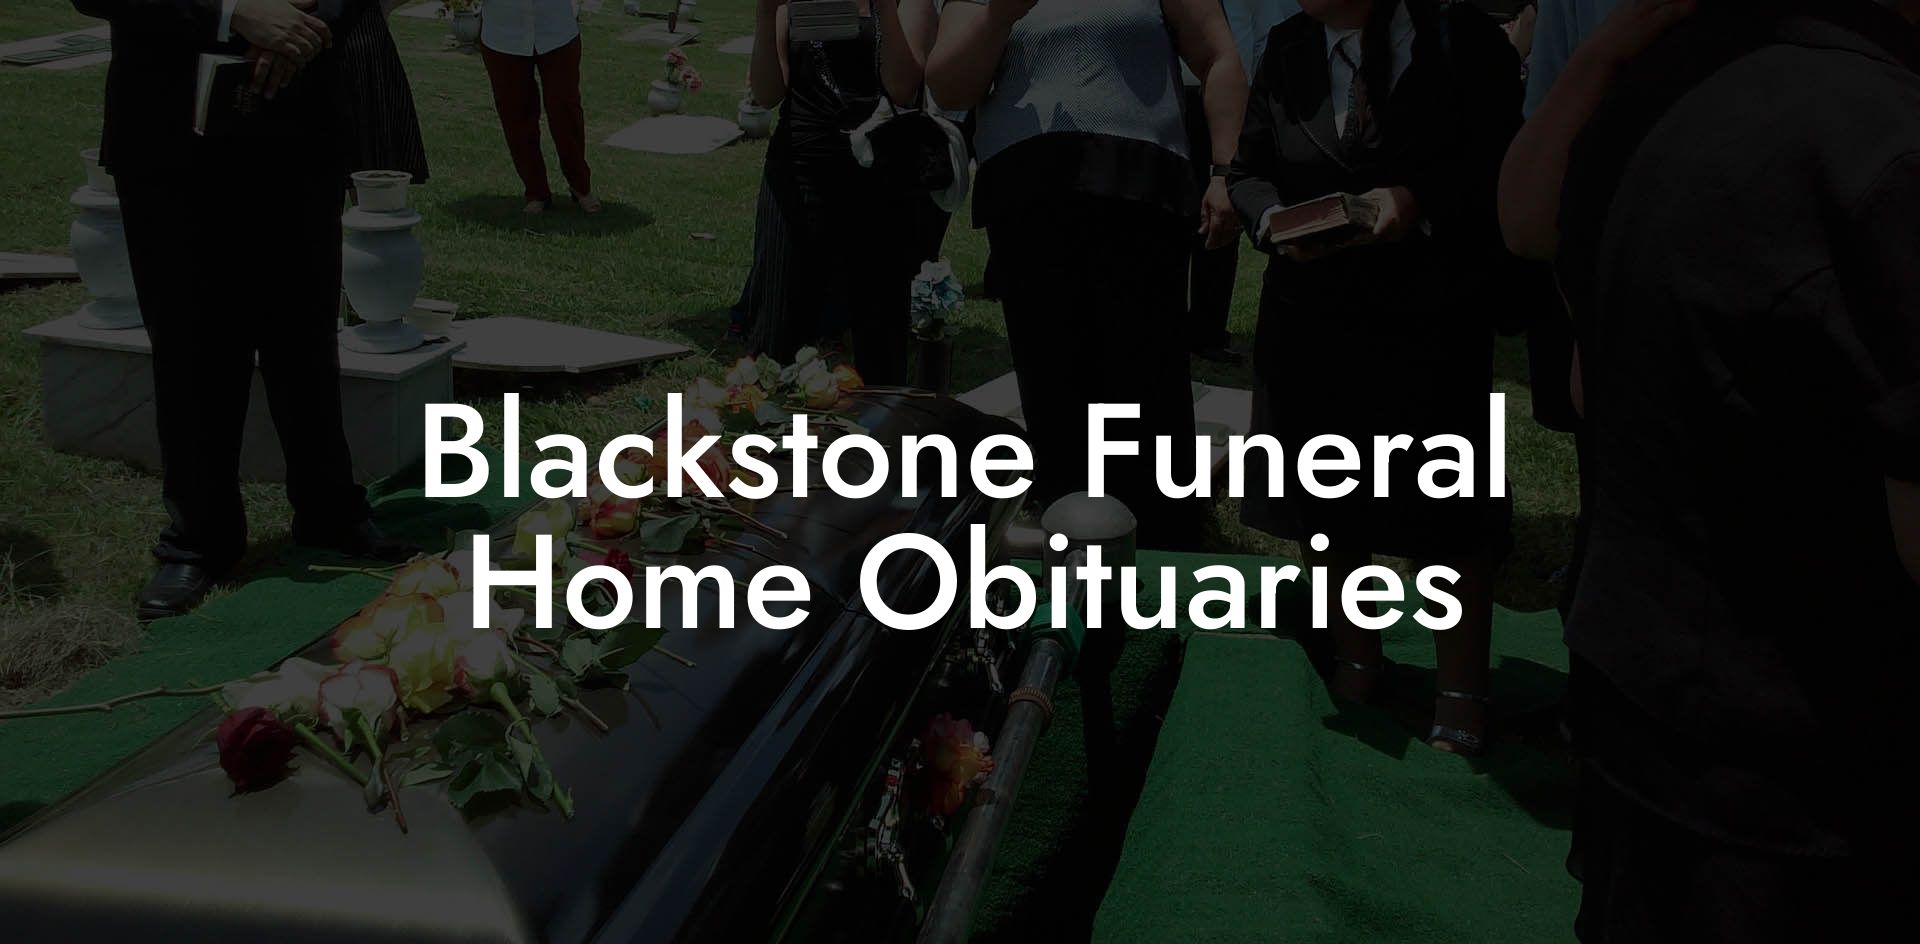 Blackstone Funeral Home Obituaries